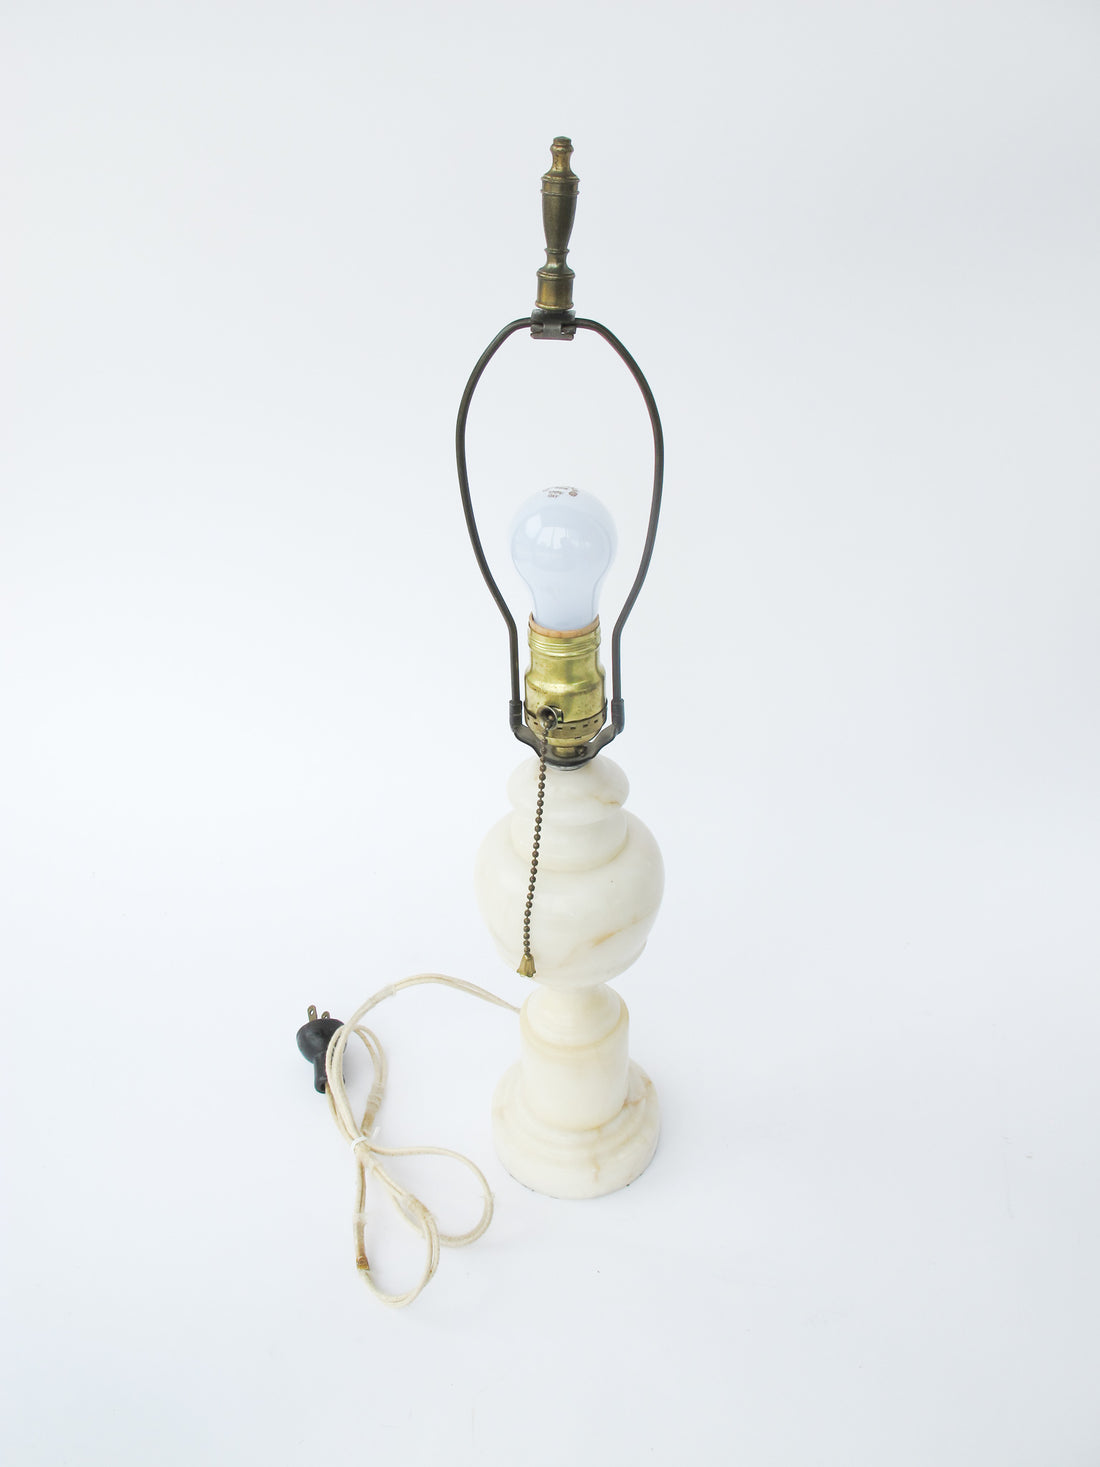 Antique White Marble Base Lamp